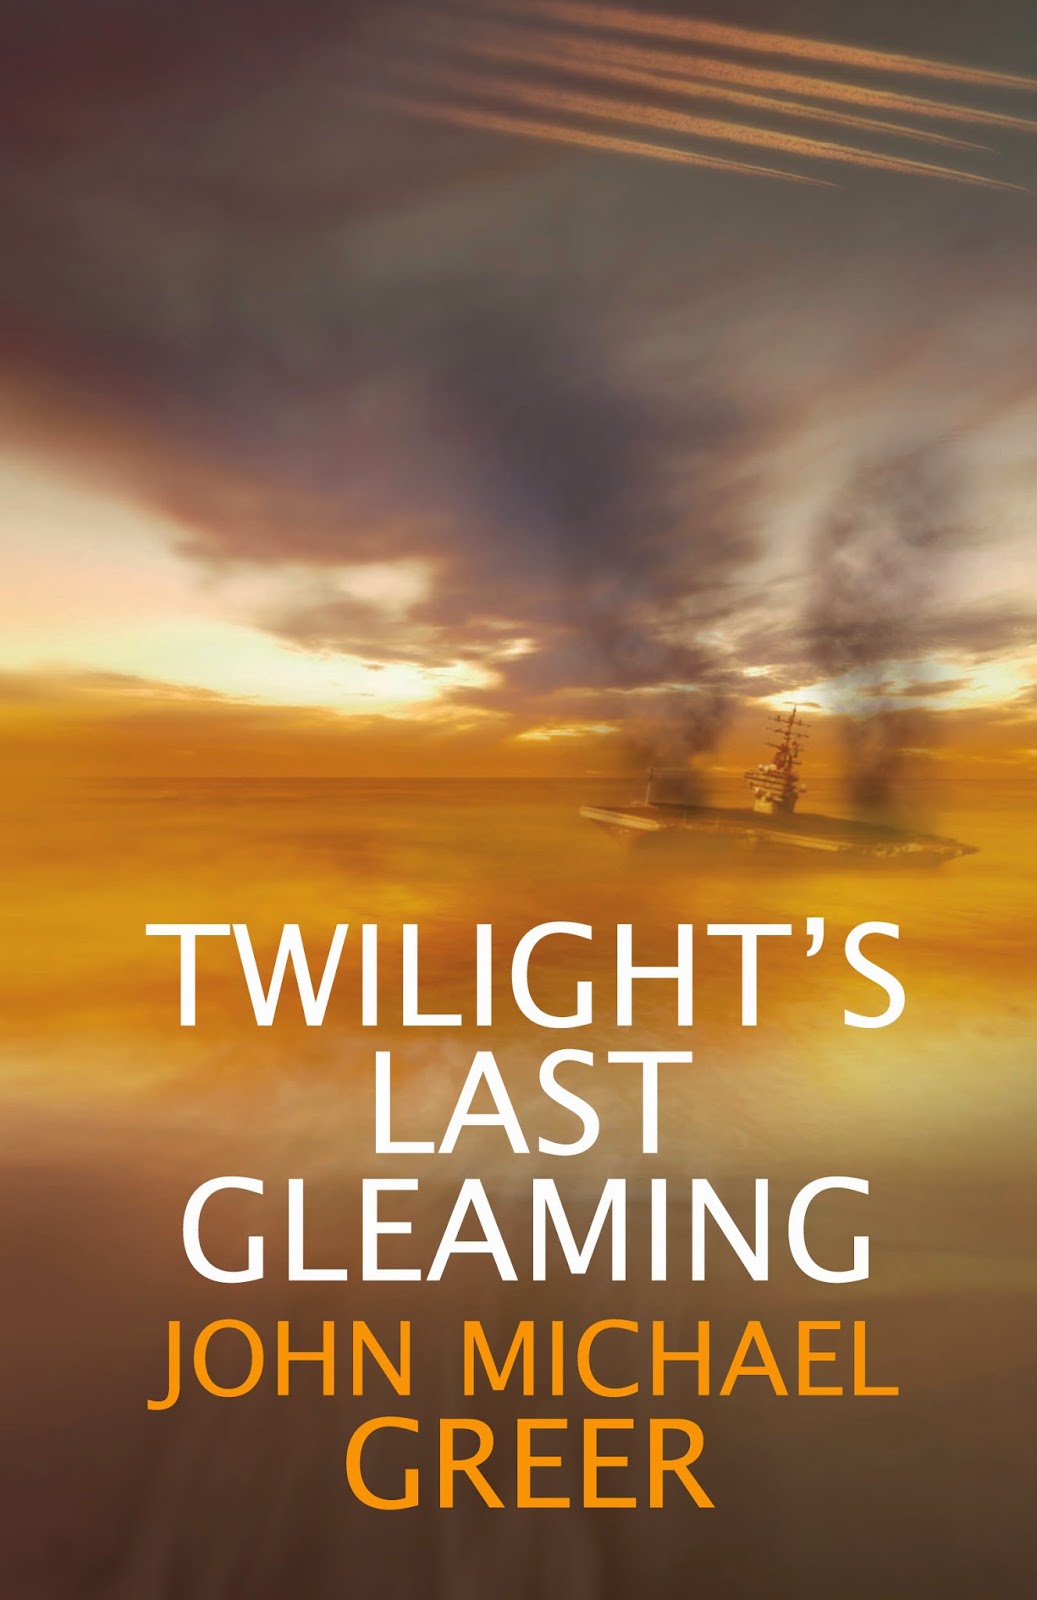 Twilight's Last Gleaming. By John Michael Greer